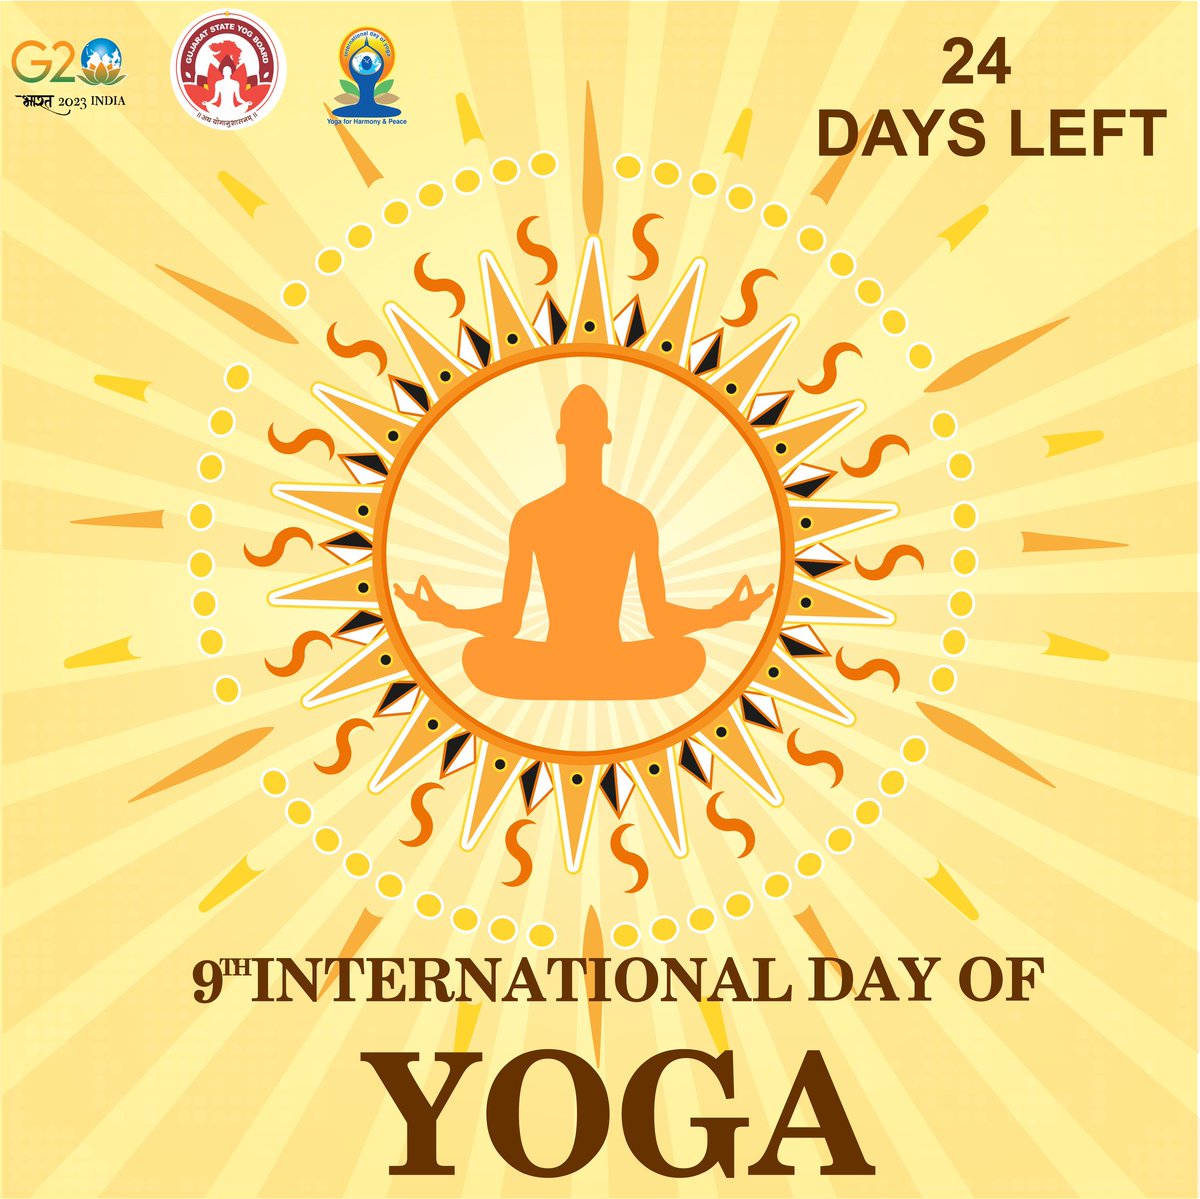 International day of Yoga 2023
Count down started
24 days left

#IDY2023Countdown #GujaratStateYogBoard #yoga #yogaflow #YogaPractice #Gujarat #yogabenefits #IDY2023